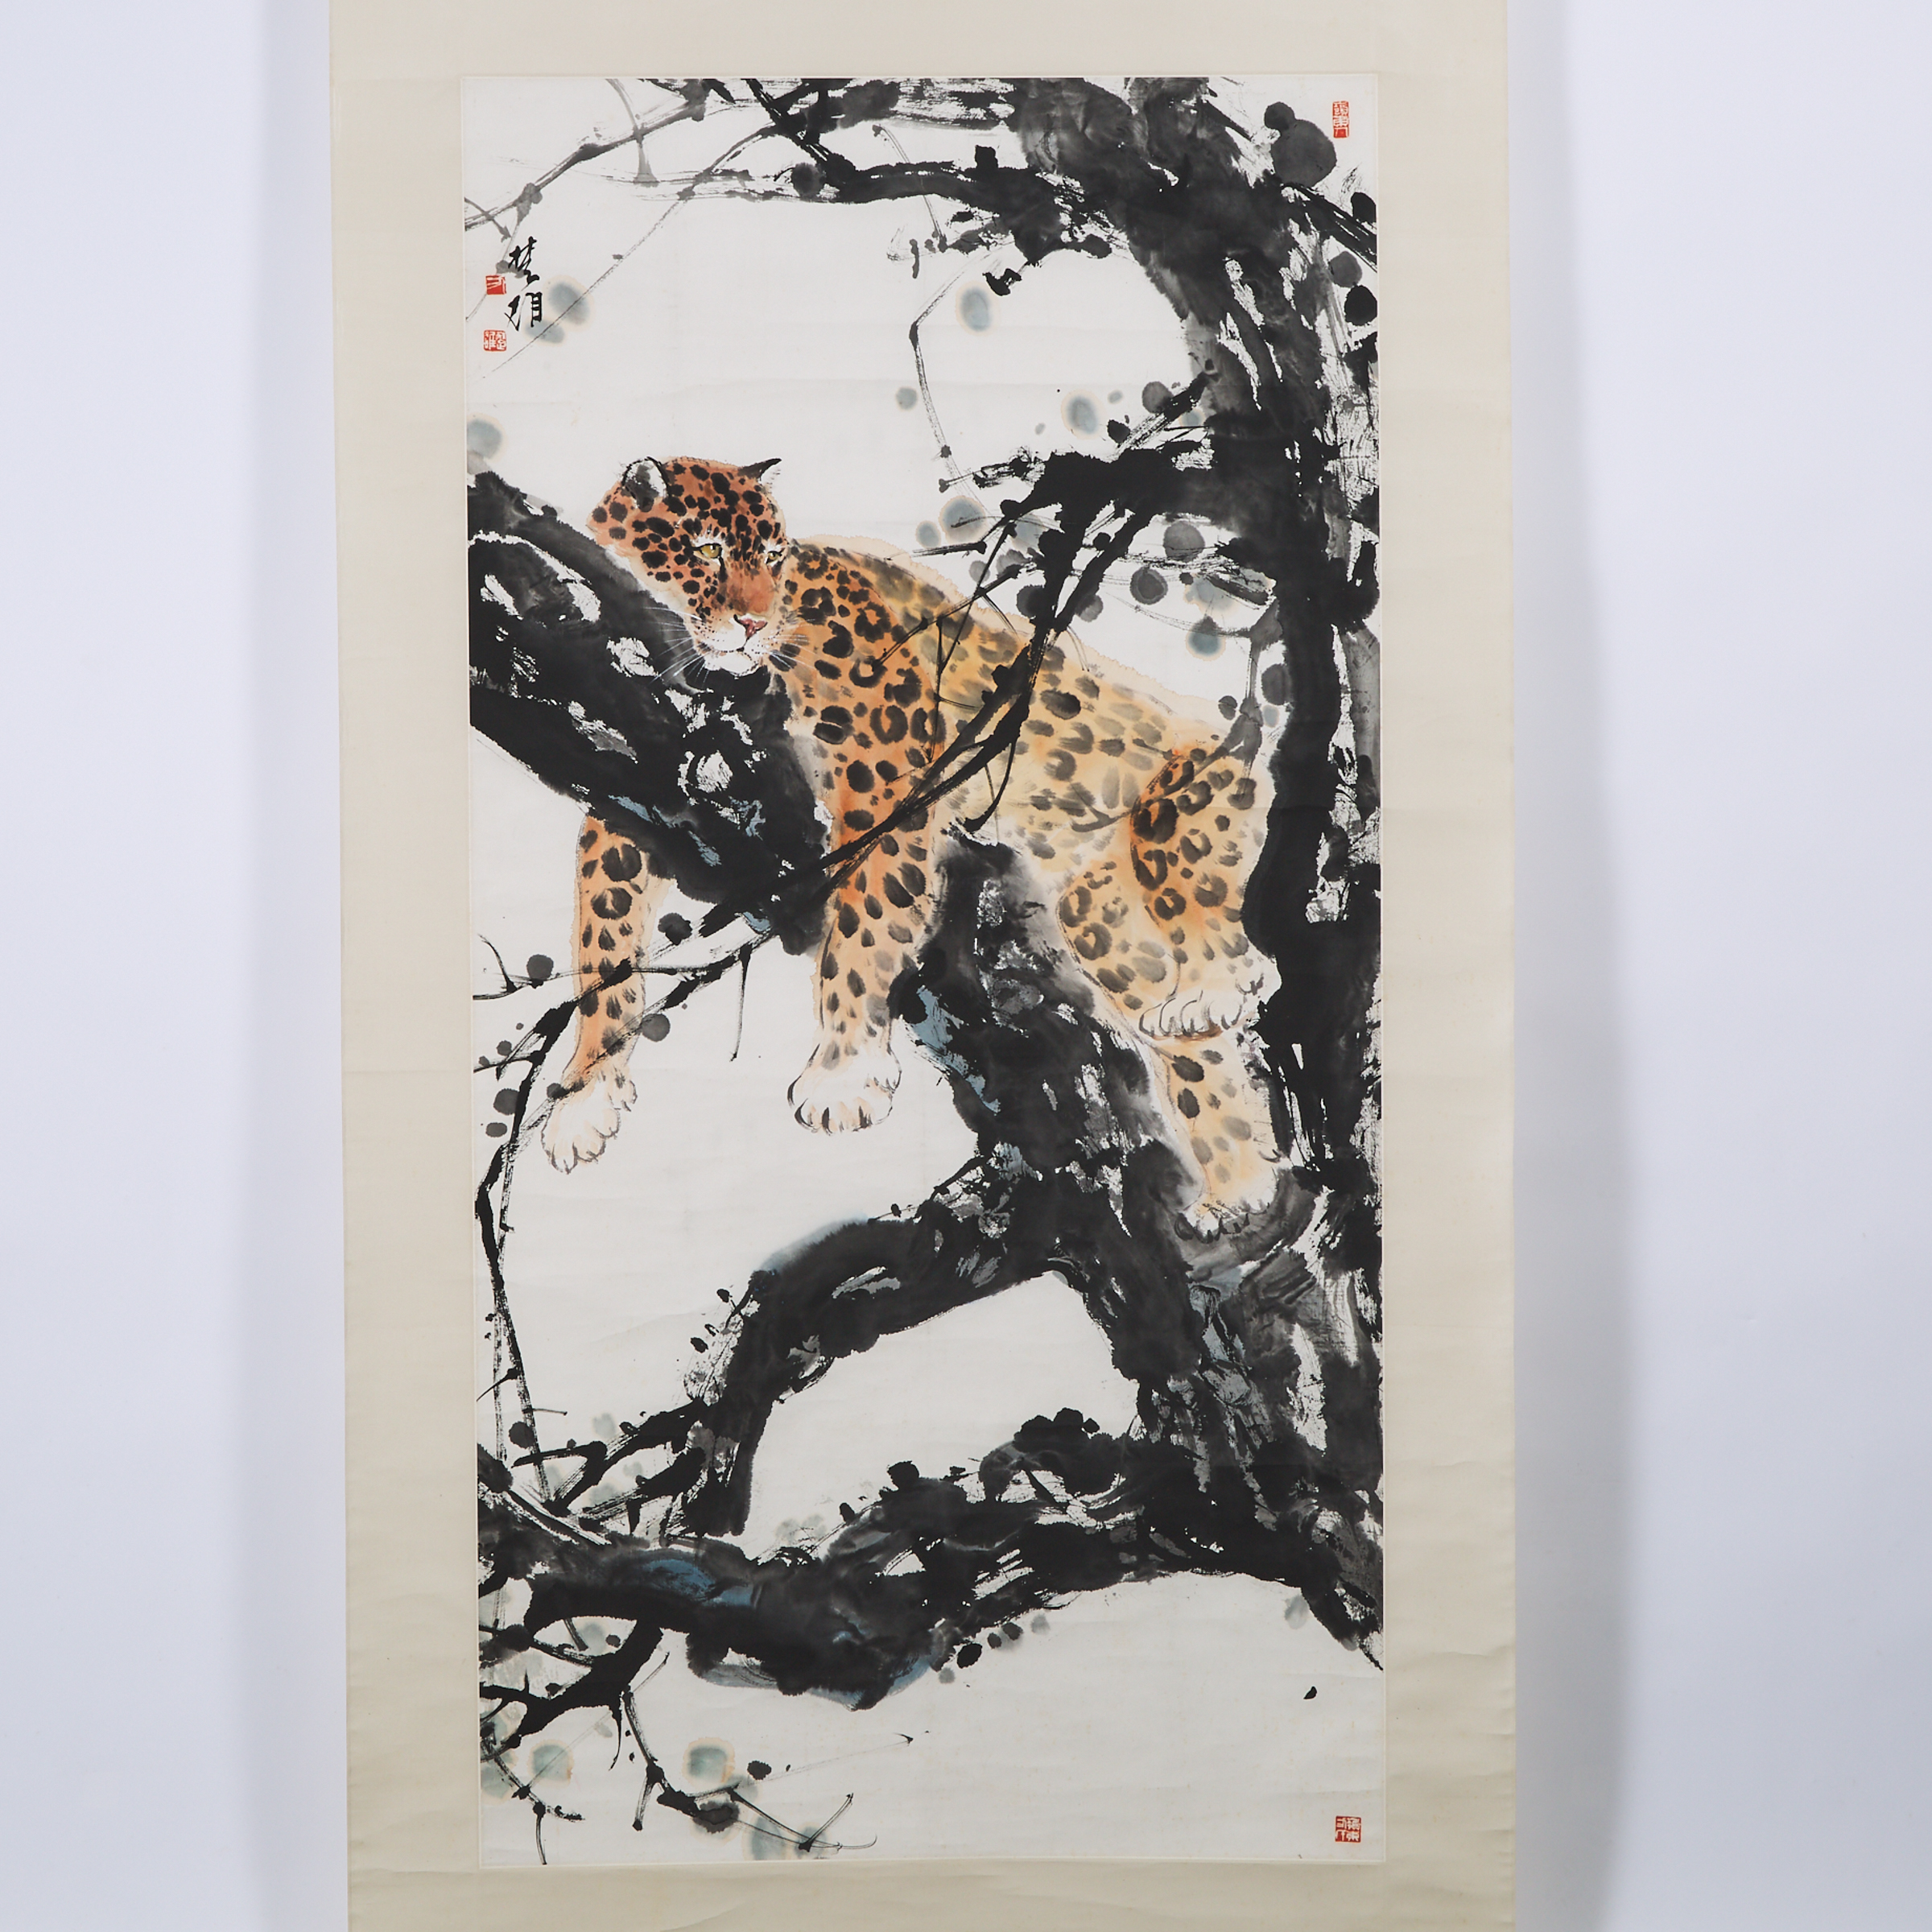 Fang Chuxiong (1950-), Leopard